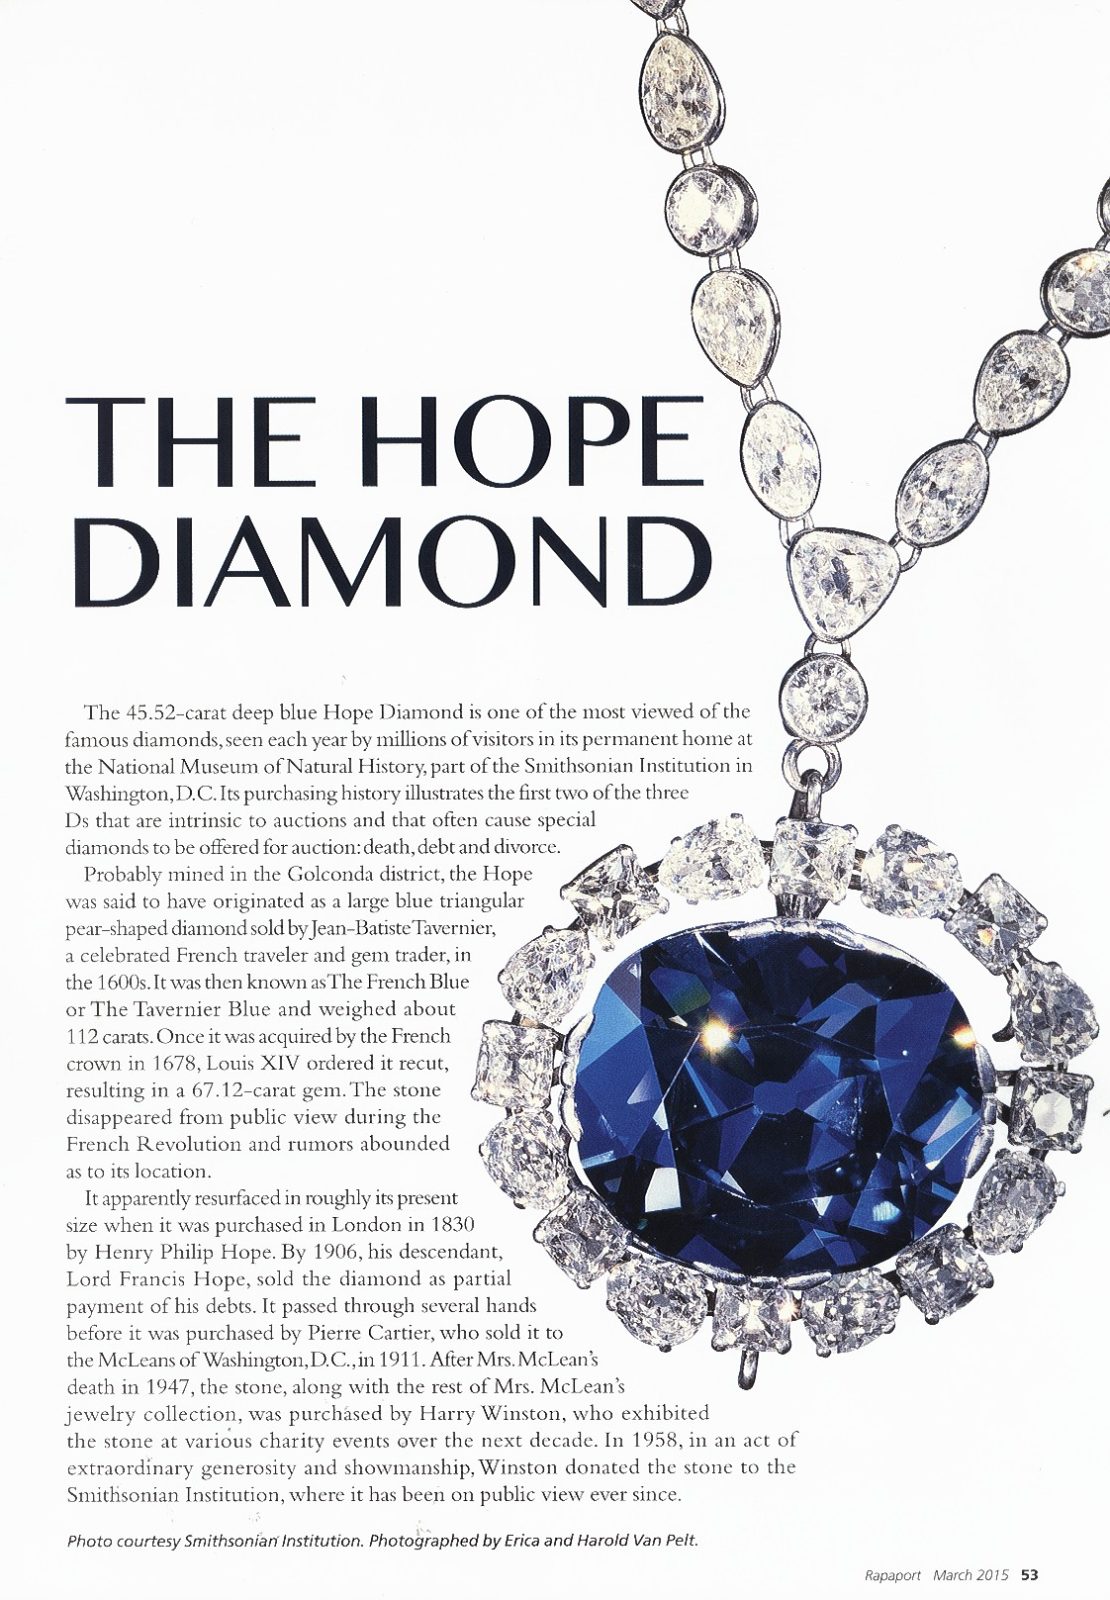 The Hope Diamond